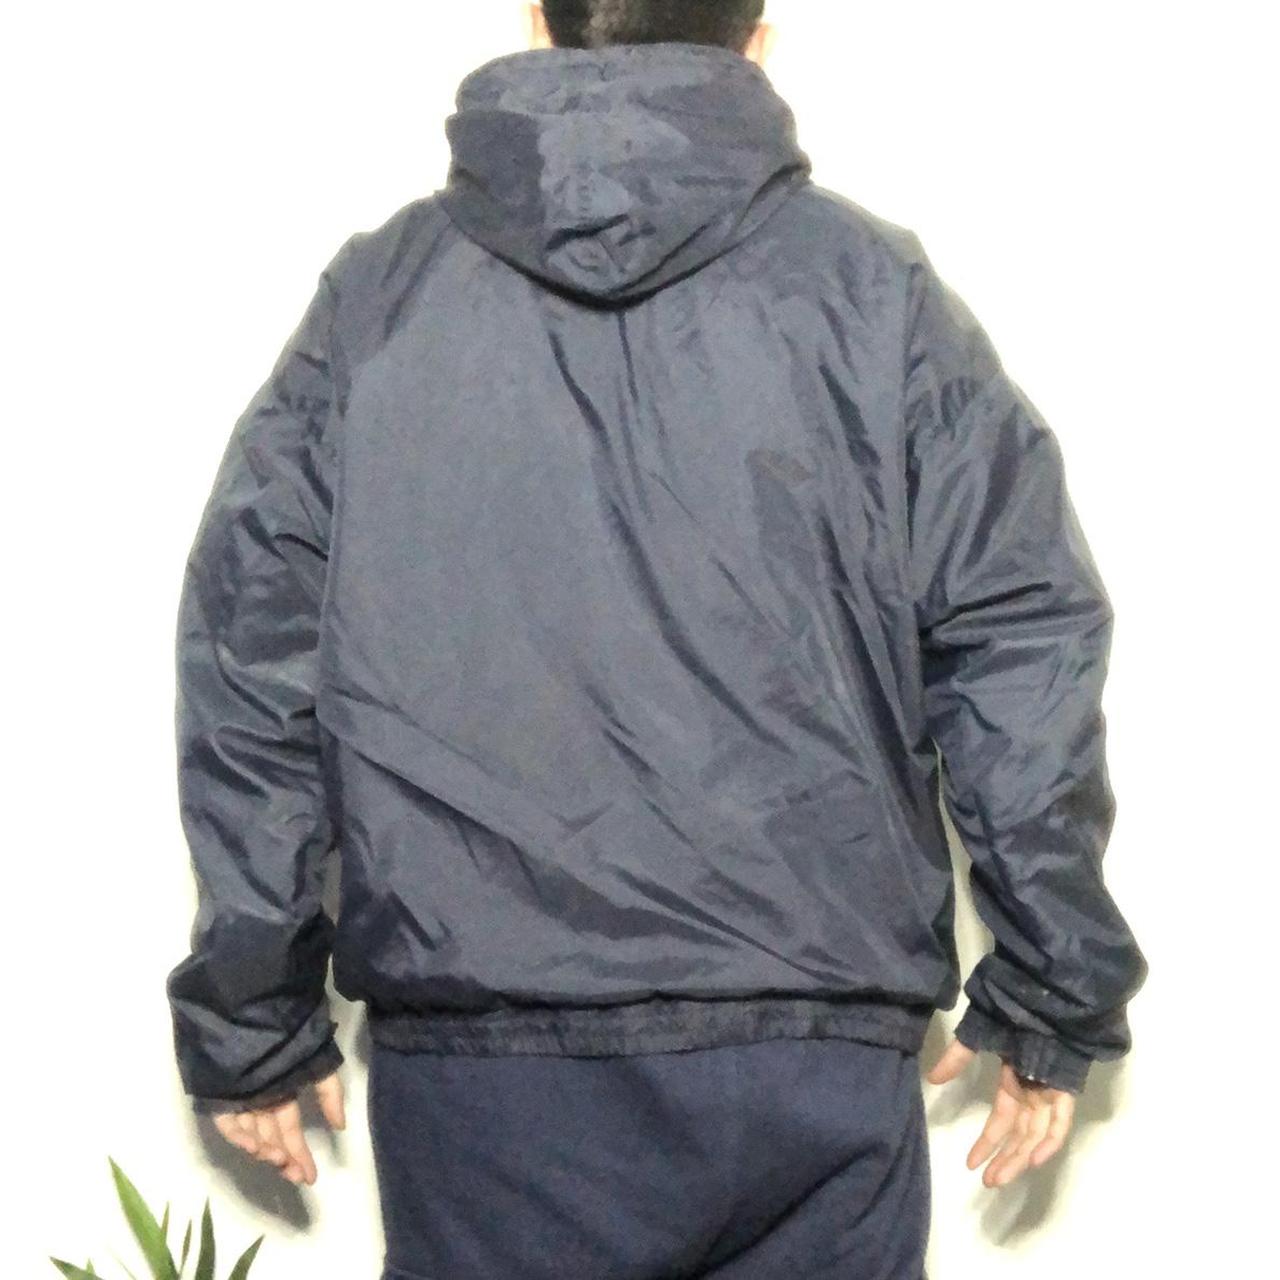 Product Image 2 - CBS Sports Windbreaker Jacket 📺🏈
Condition: